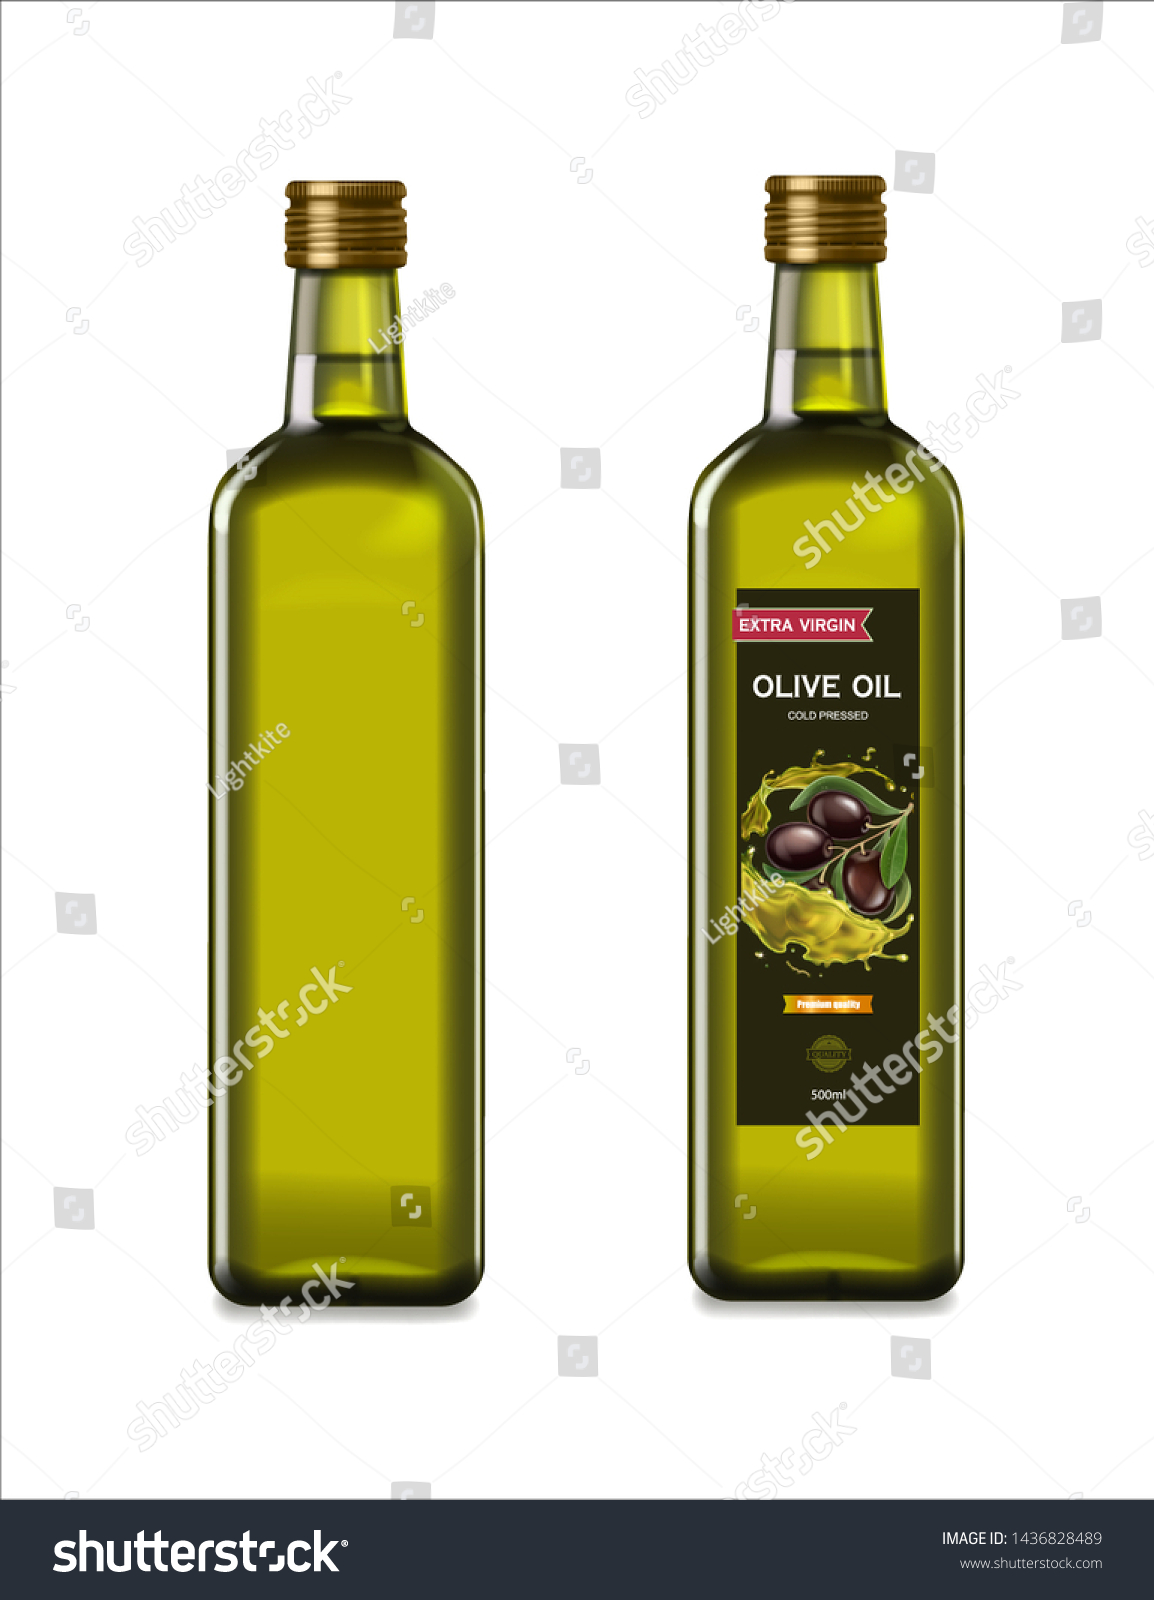 olive oil bottle vector